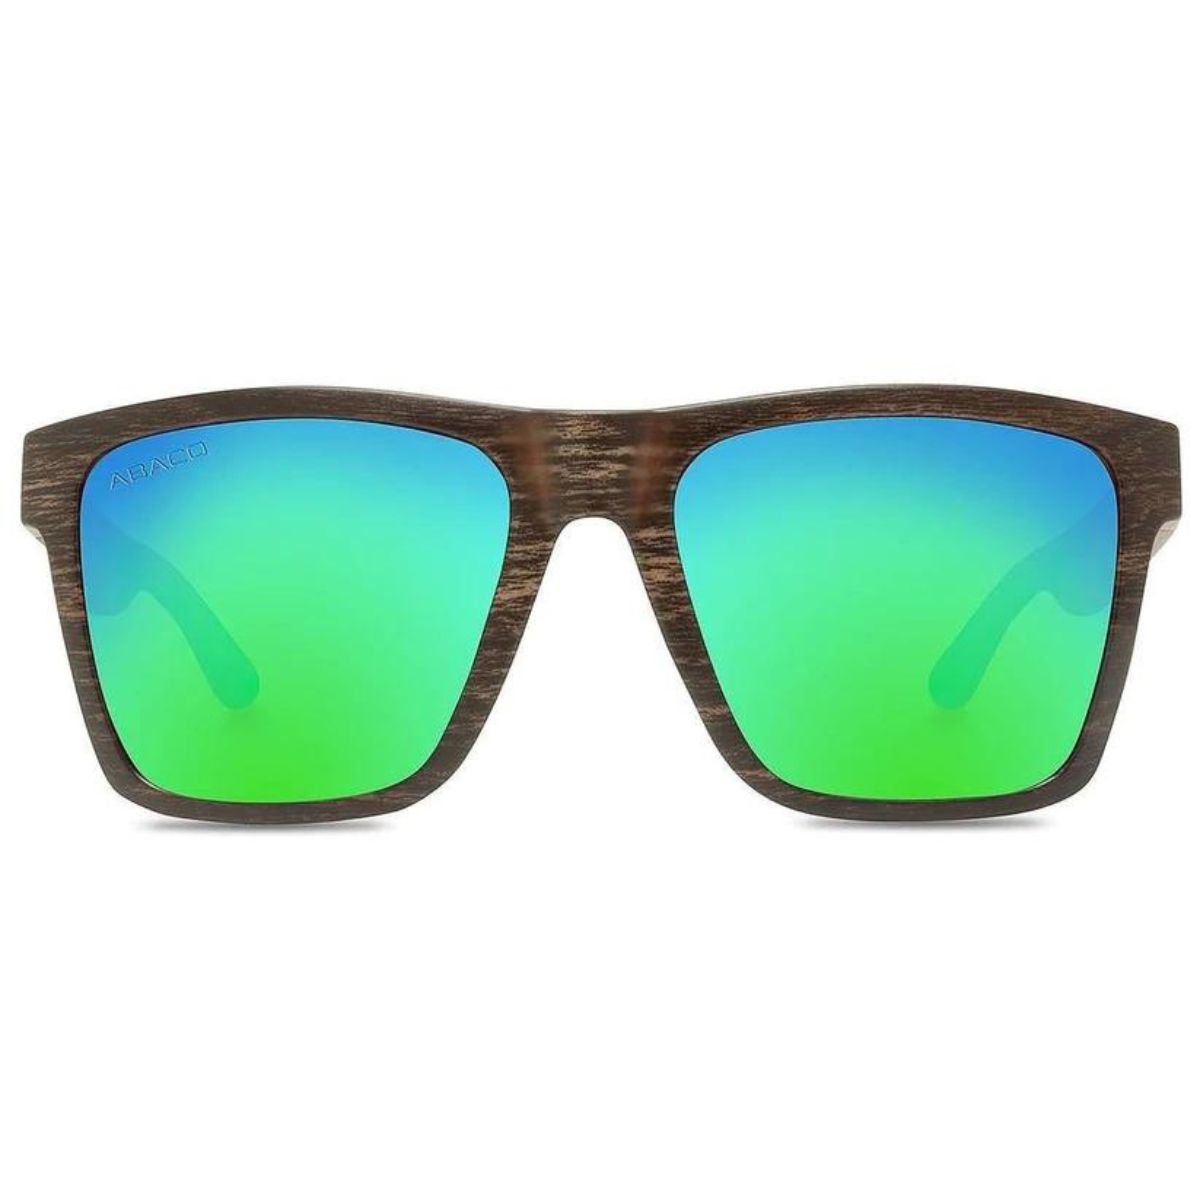 Abaco Cruiser Sunglasses in Black Wood/Ocean Mirror - BoardCo